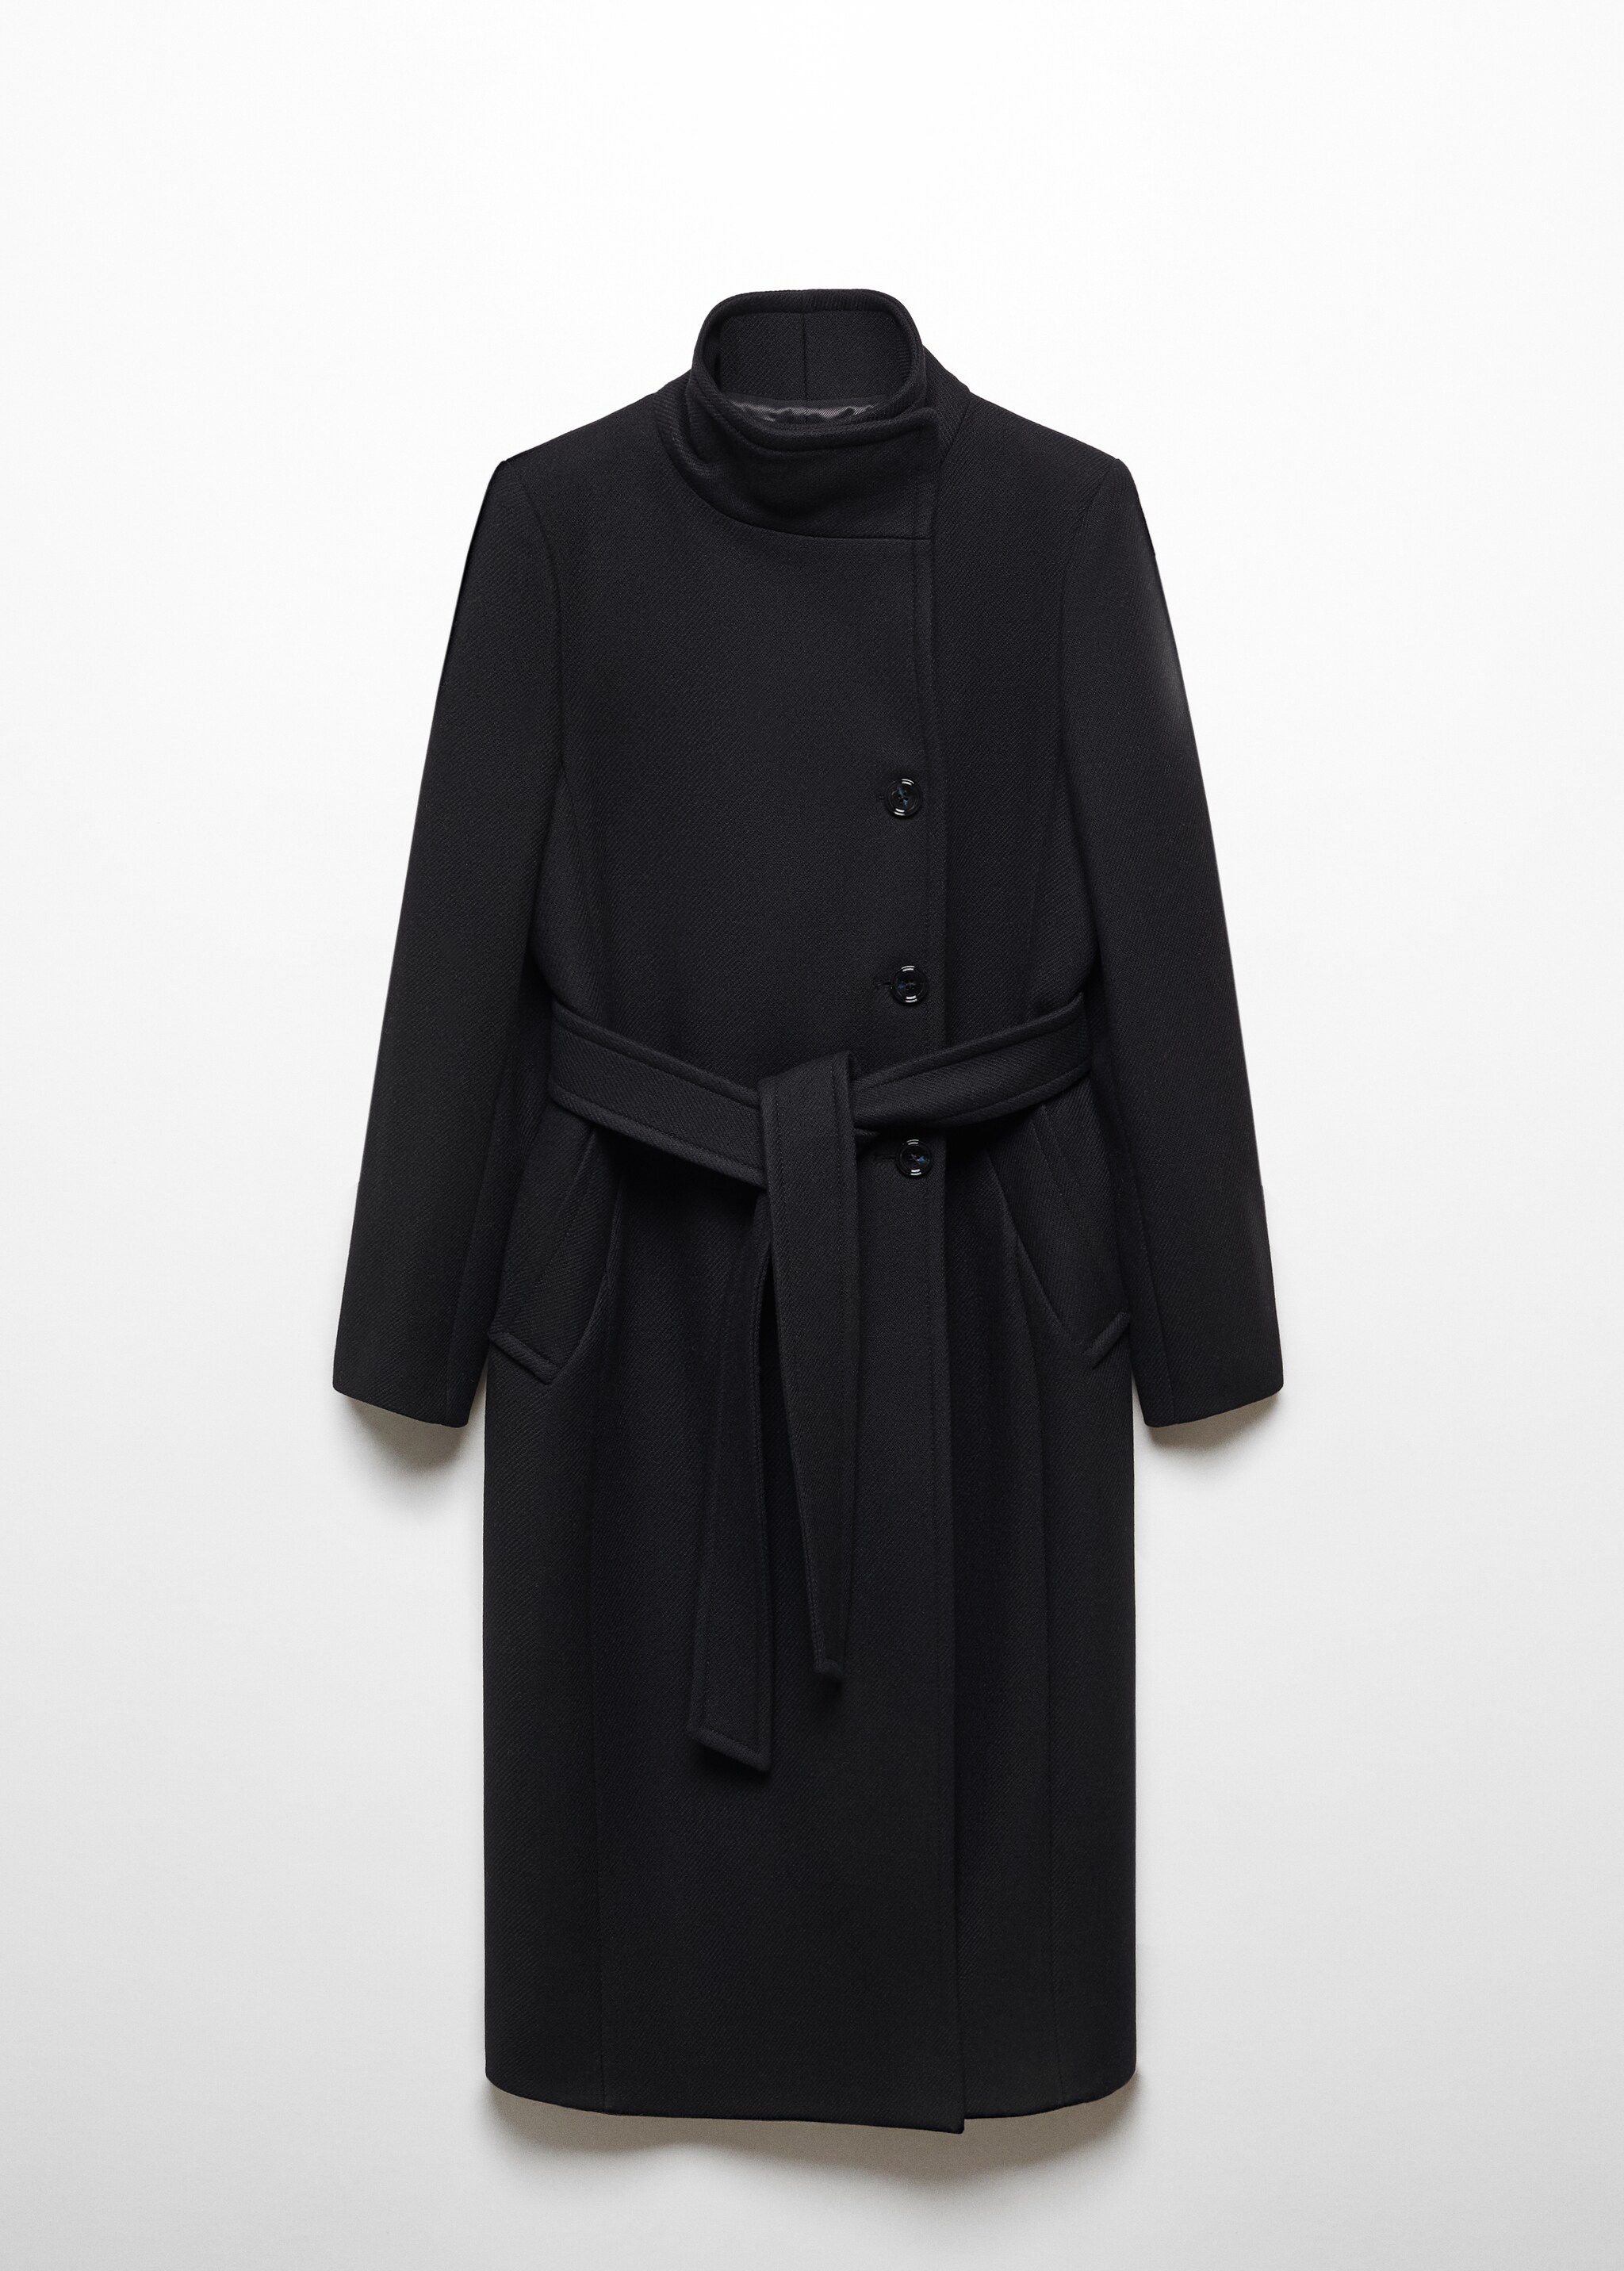 Cappotto lana Manteco cintura - Articolo senza modello